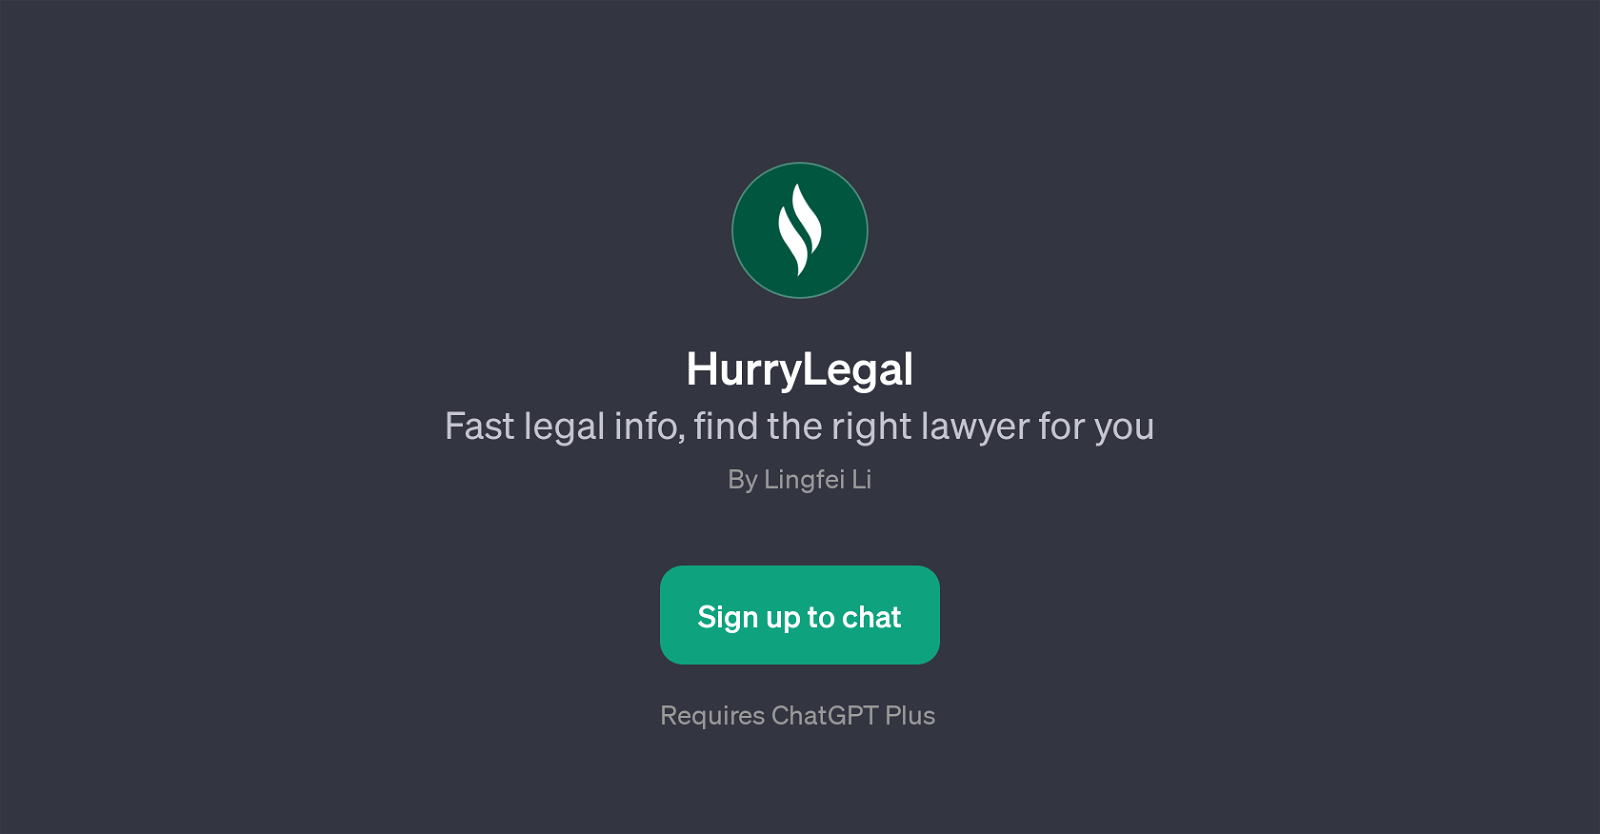 HurryLegal website